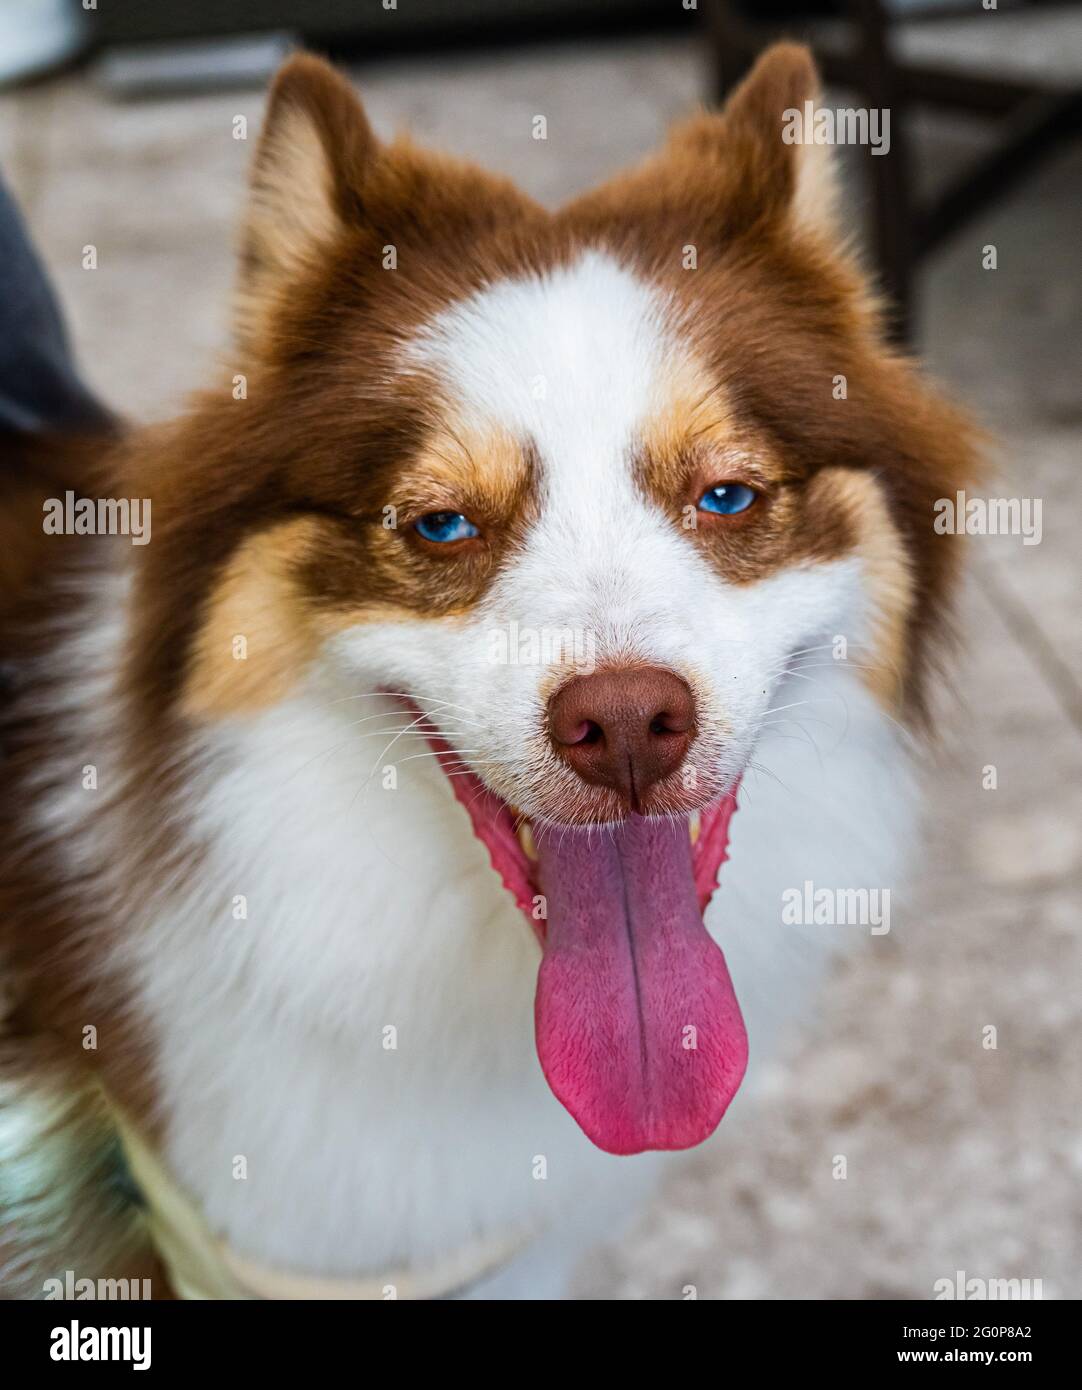 Beautiful Brown, Tan and White Pomeranian and Husky (Pomsky) mixed breed dog. Stock Photo